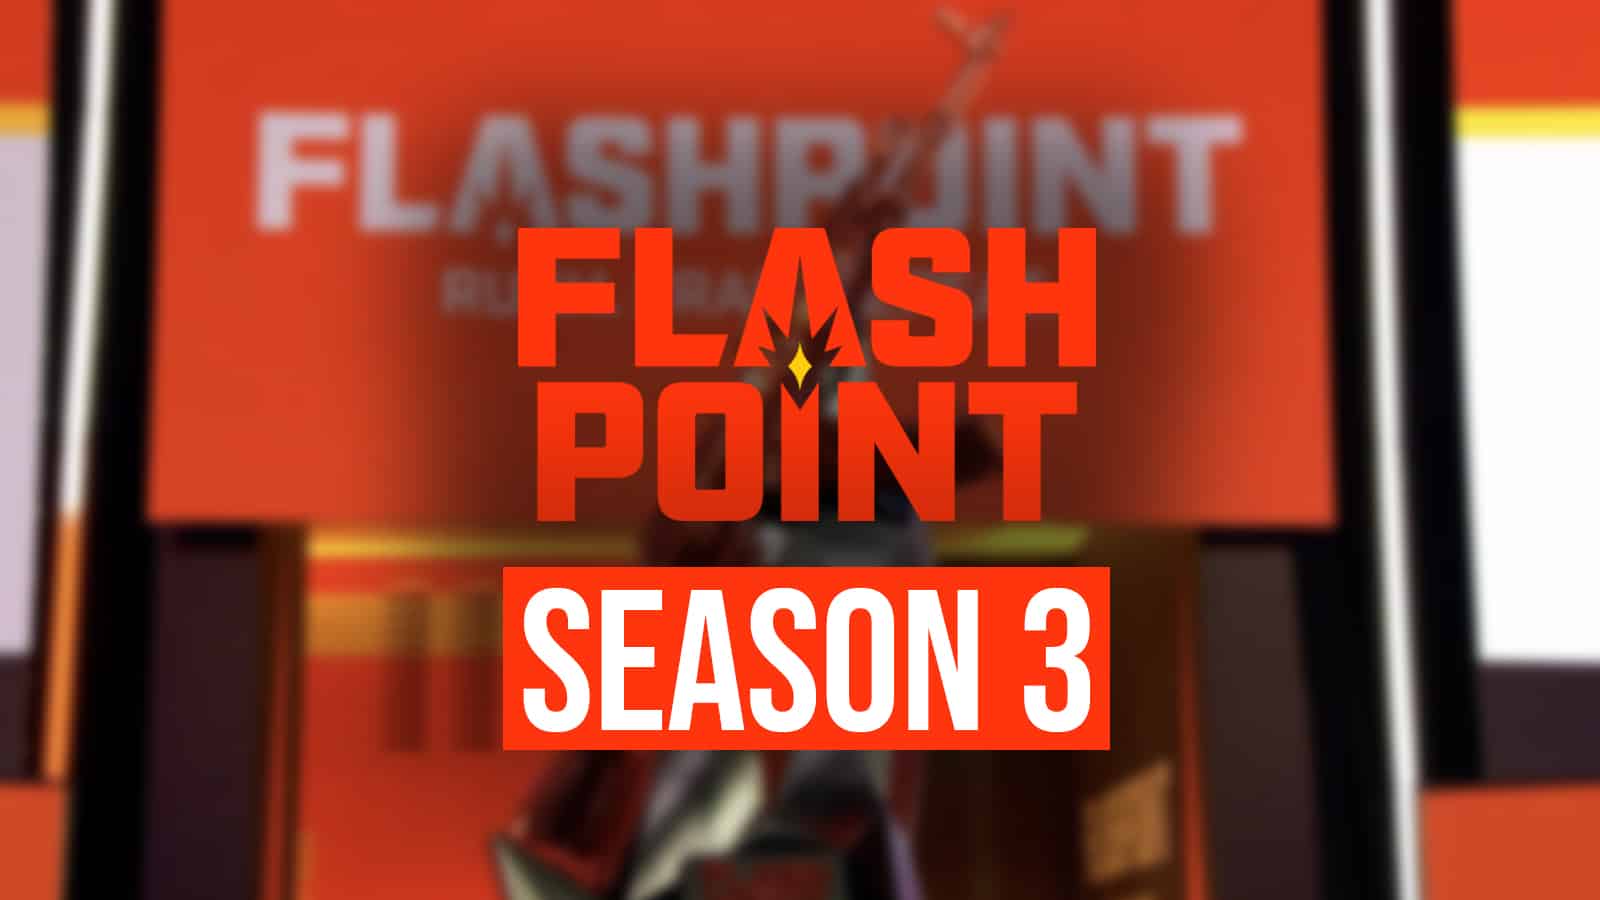 Flashpoint Season 3 details stream teams schedule results